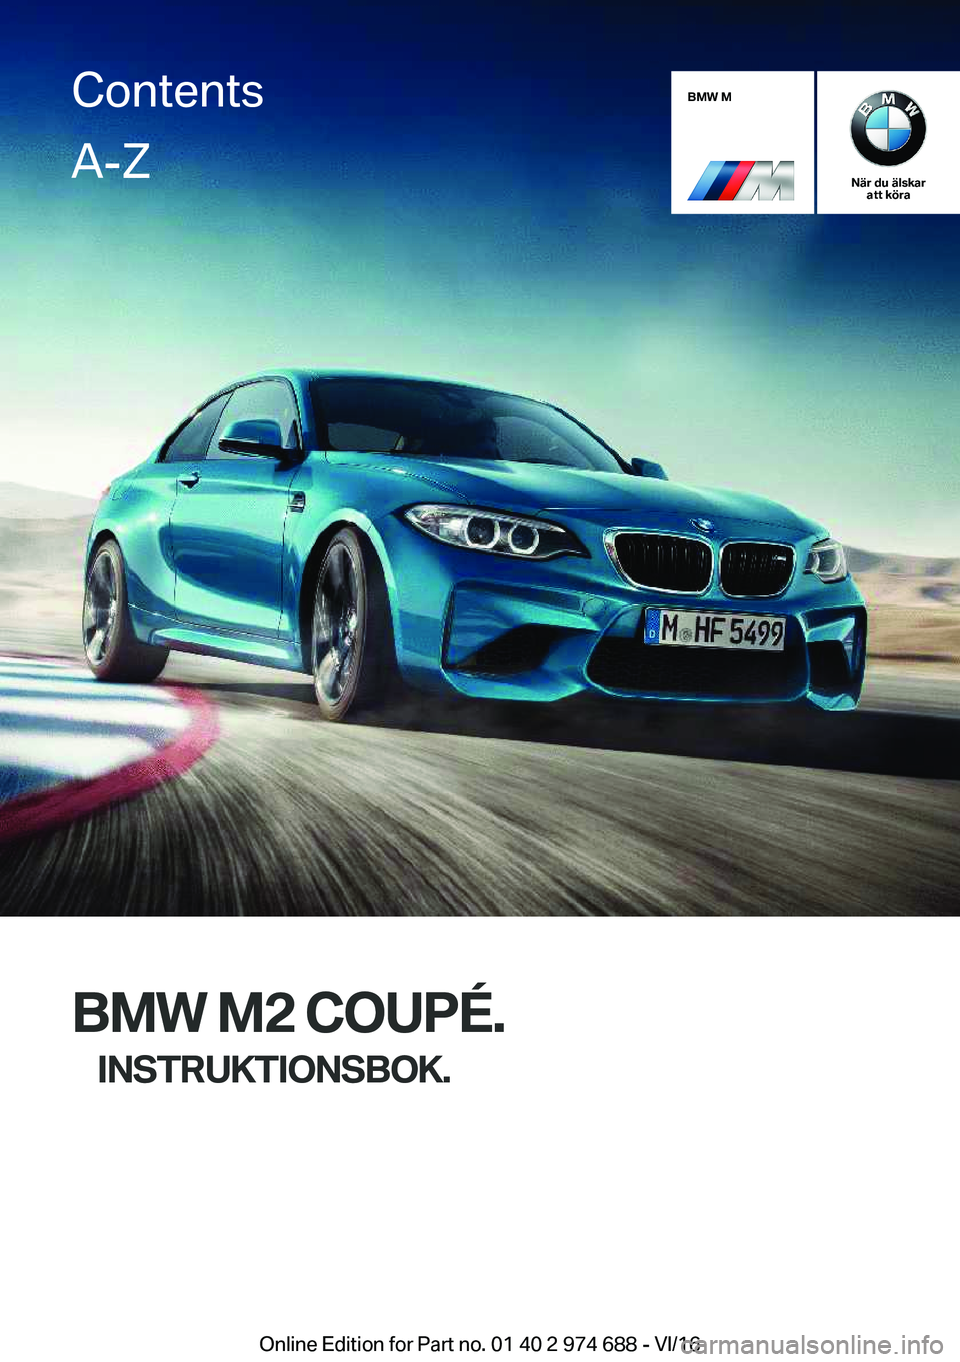 BMW M2 2017  InstruktionsbÖcker (in Swedish) �B�M�W��M
�N�ä�r��d�u��ä�l�s�k�a�r�a�t�t��k�